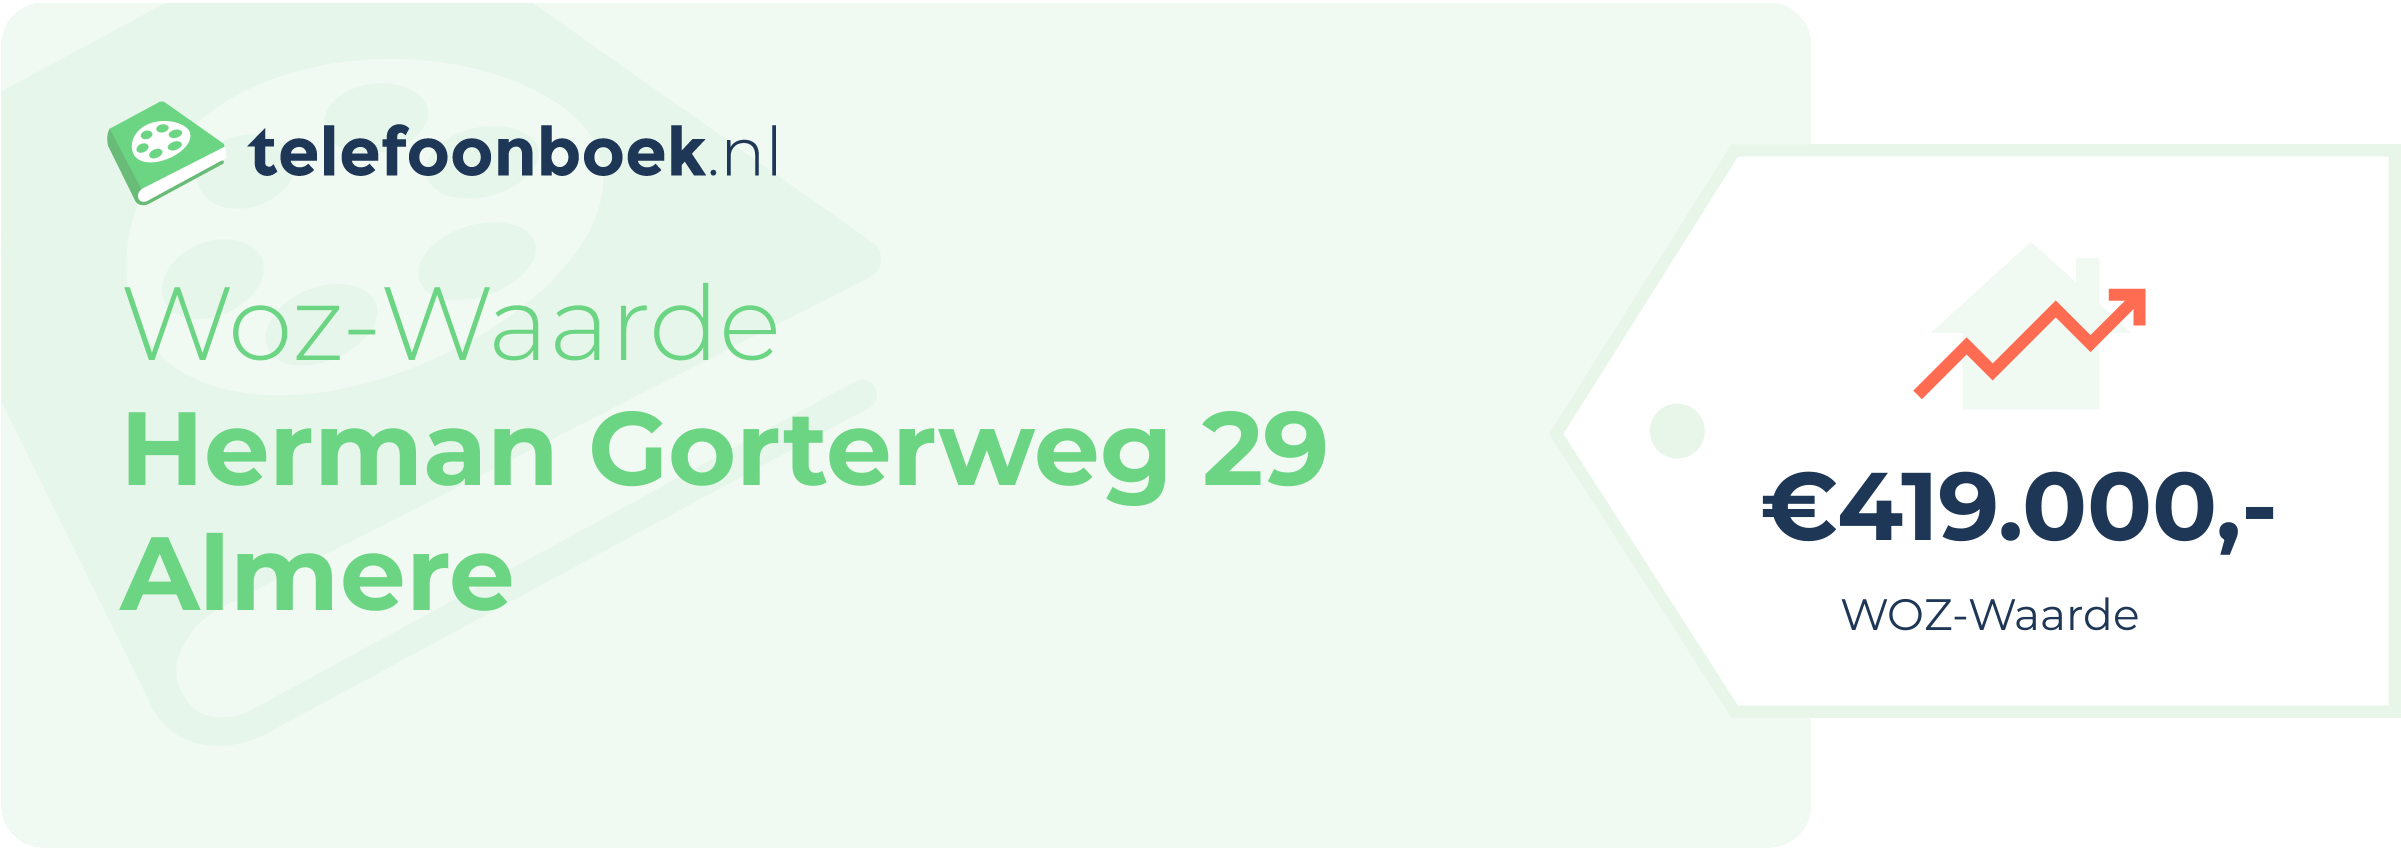 WOZ-waarde Herman Gorterweg 29 Almere